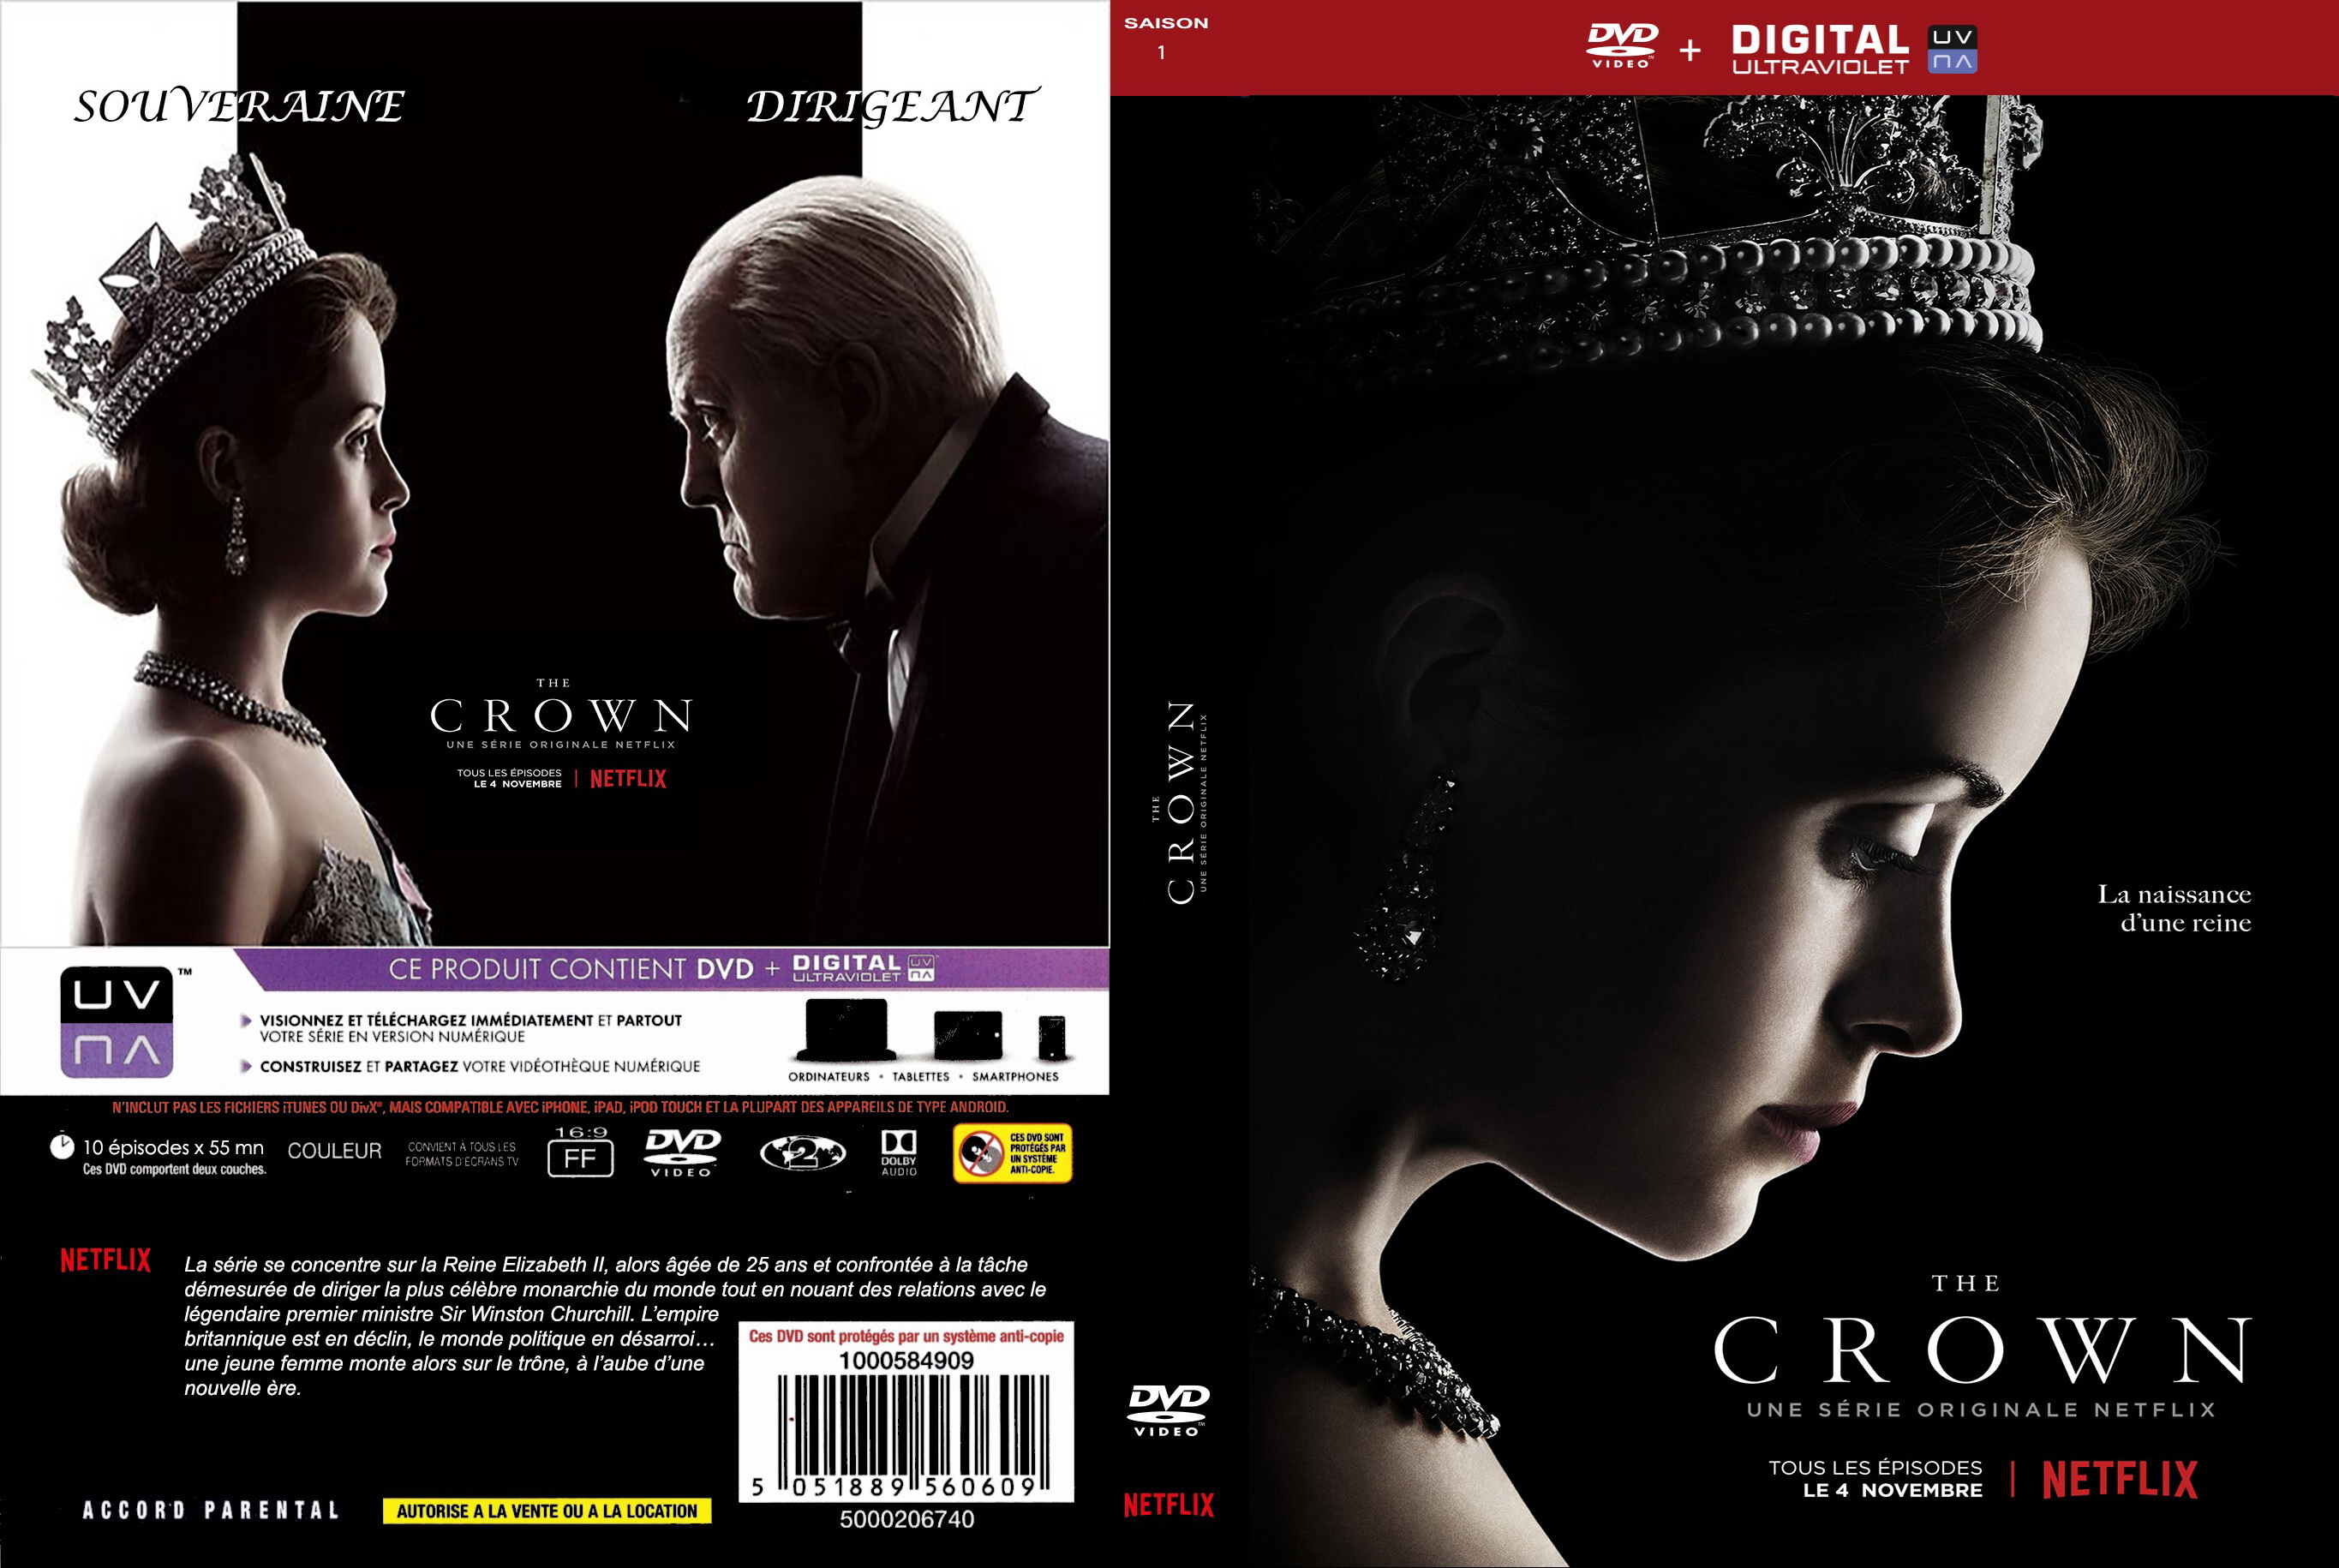 Jaquette DVD The Crown Saison 1 custom